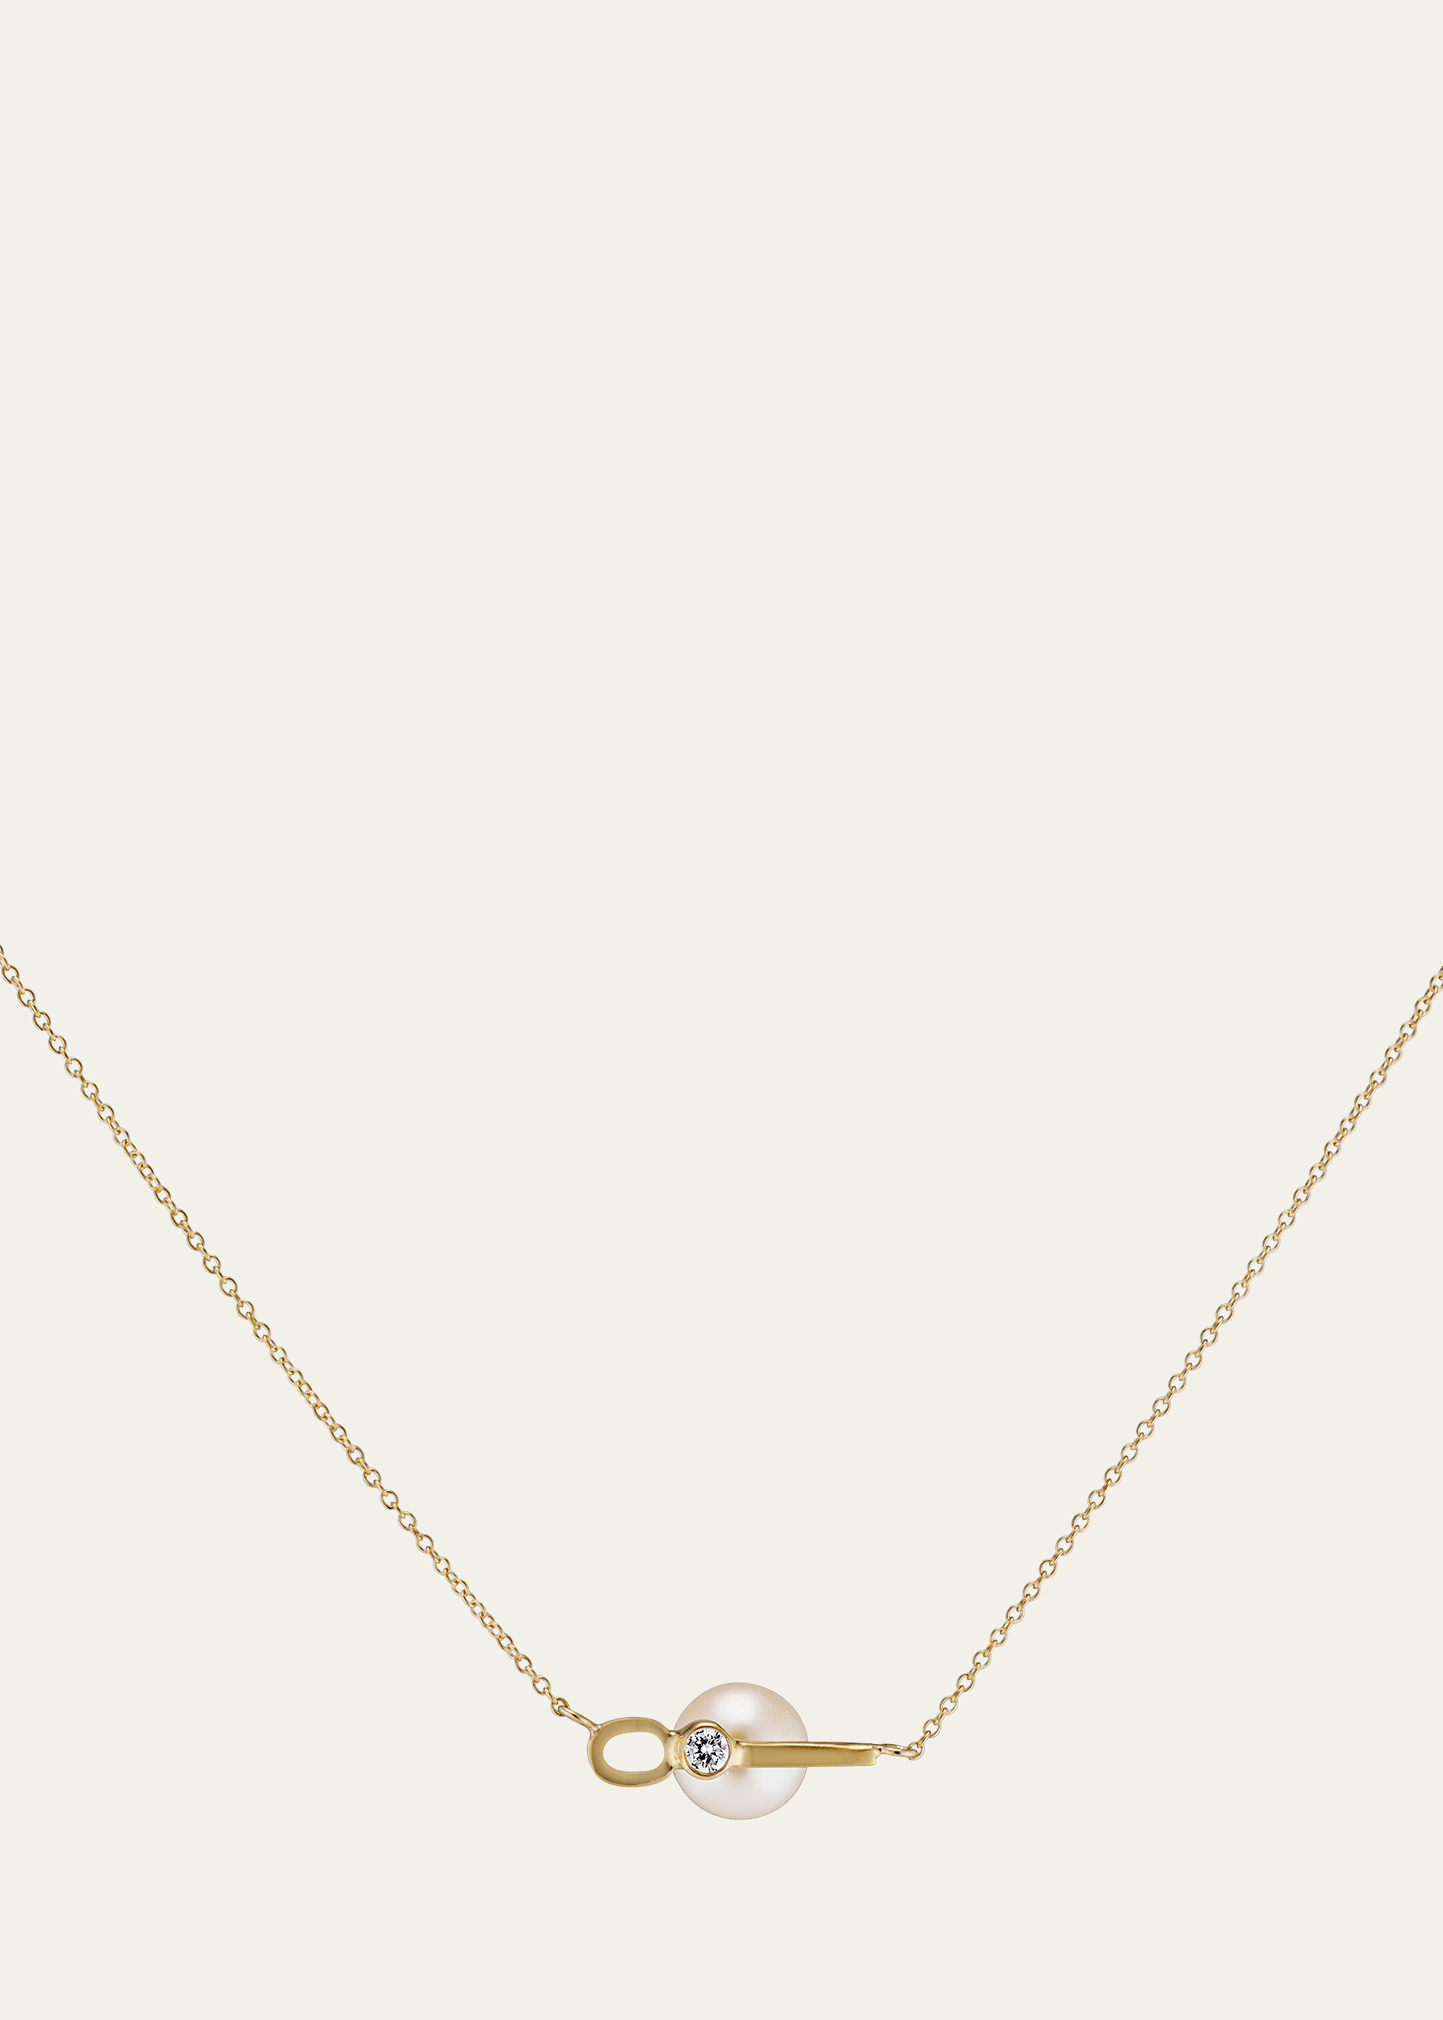 Katey Walker 18k Pearl And Diamond Choker Necklace In Yg